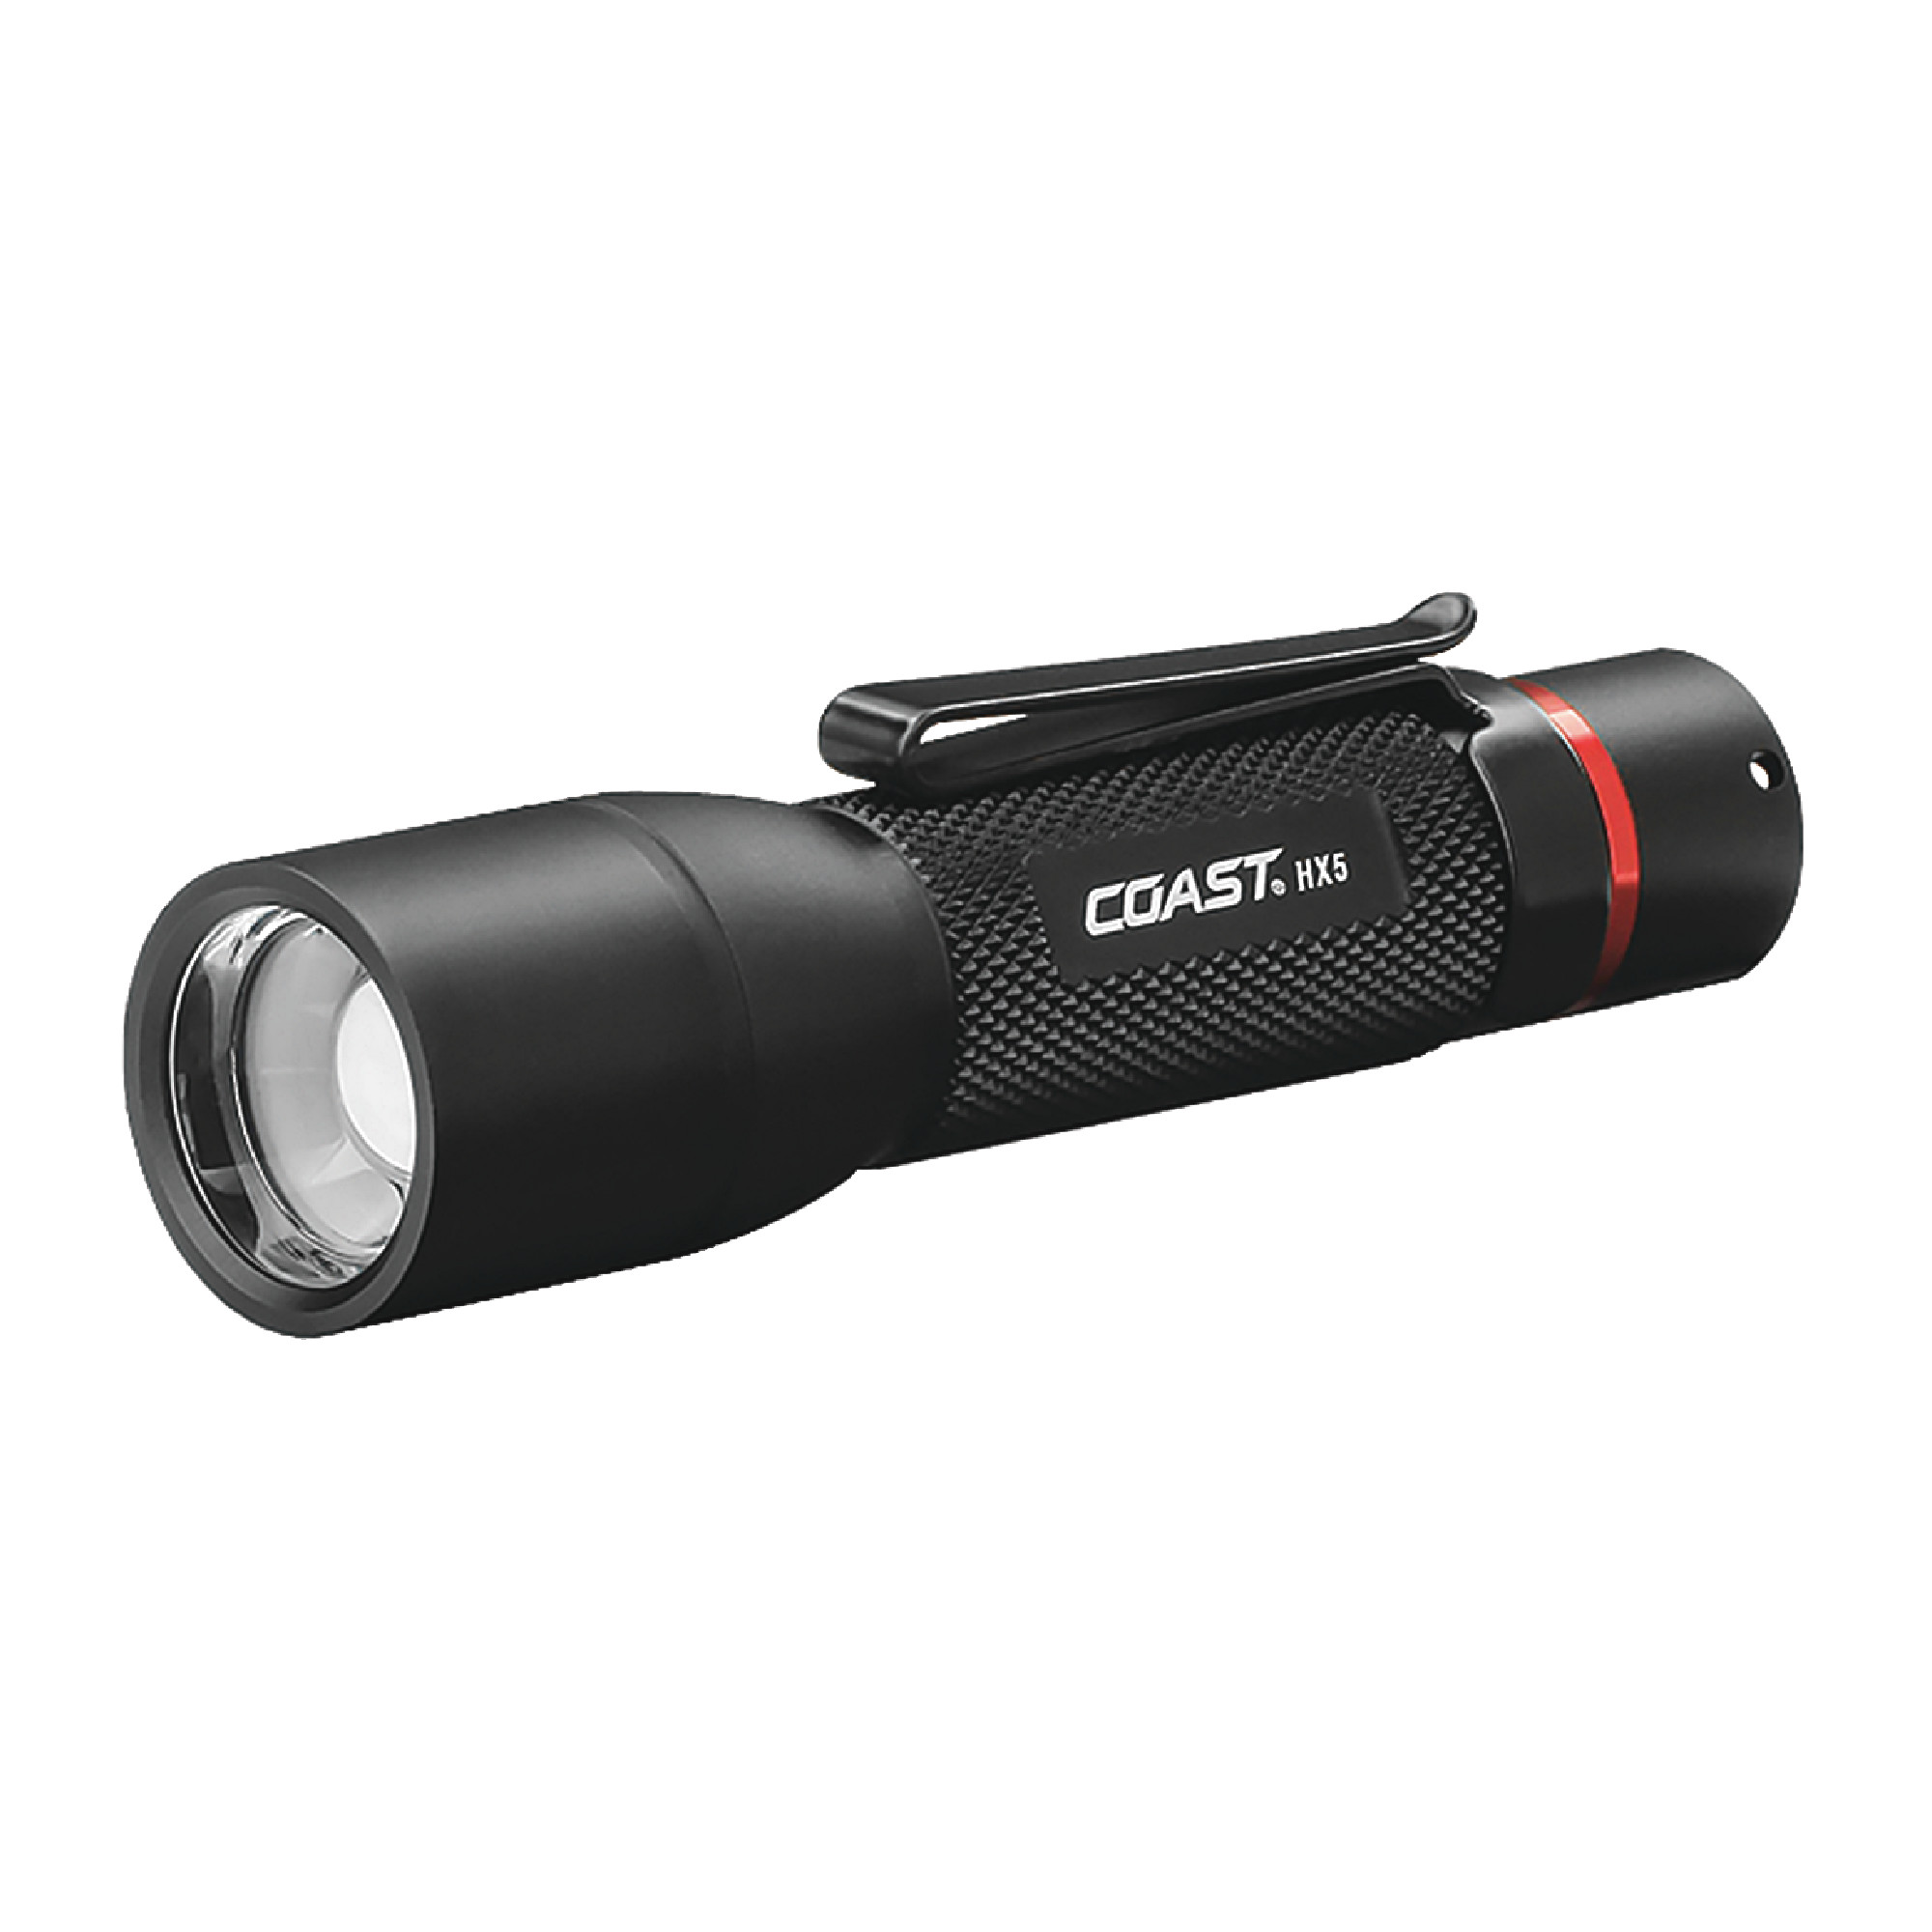 COAST HX5 Handheld Flashlight